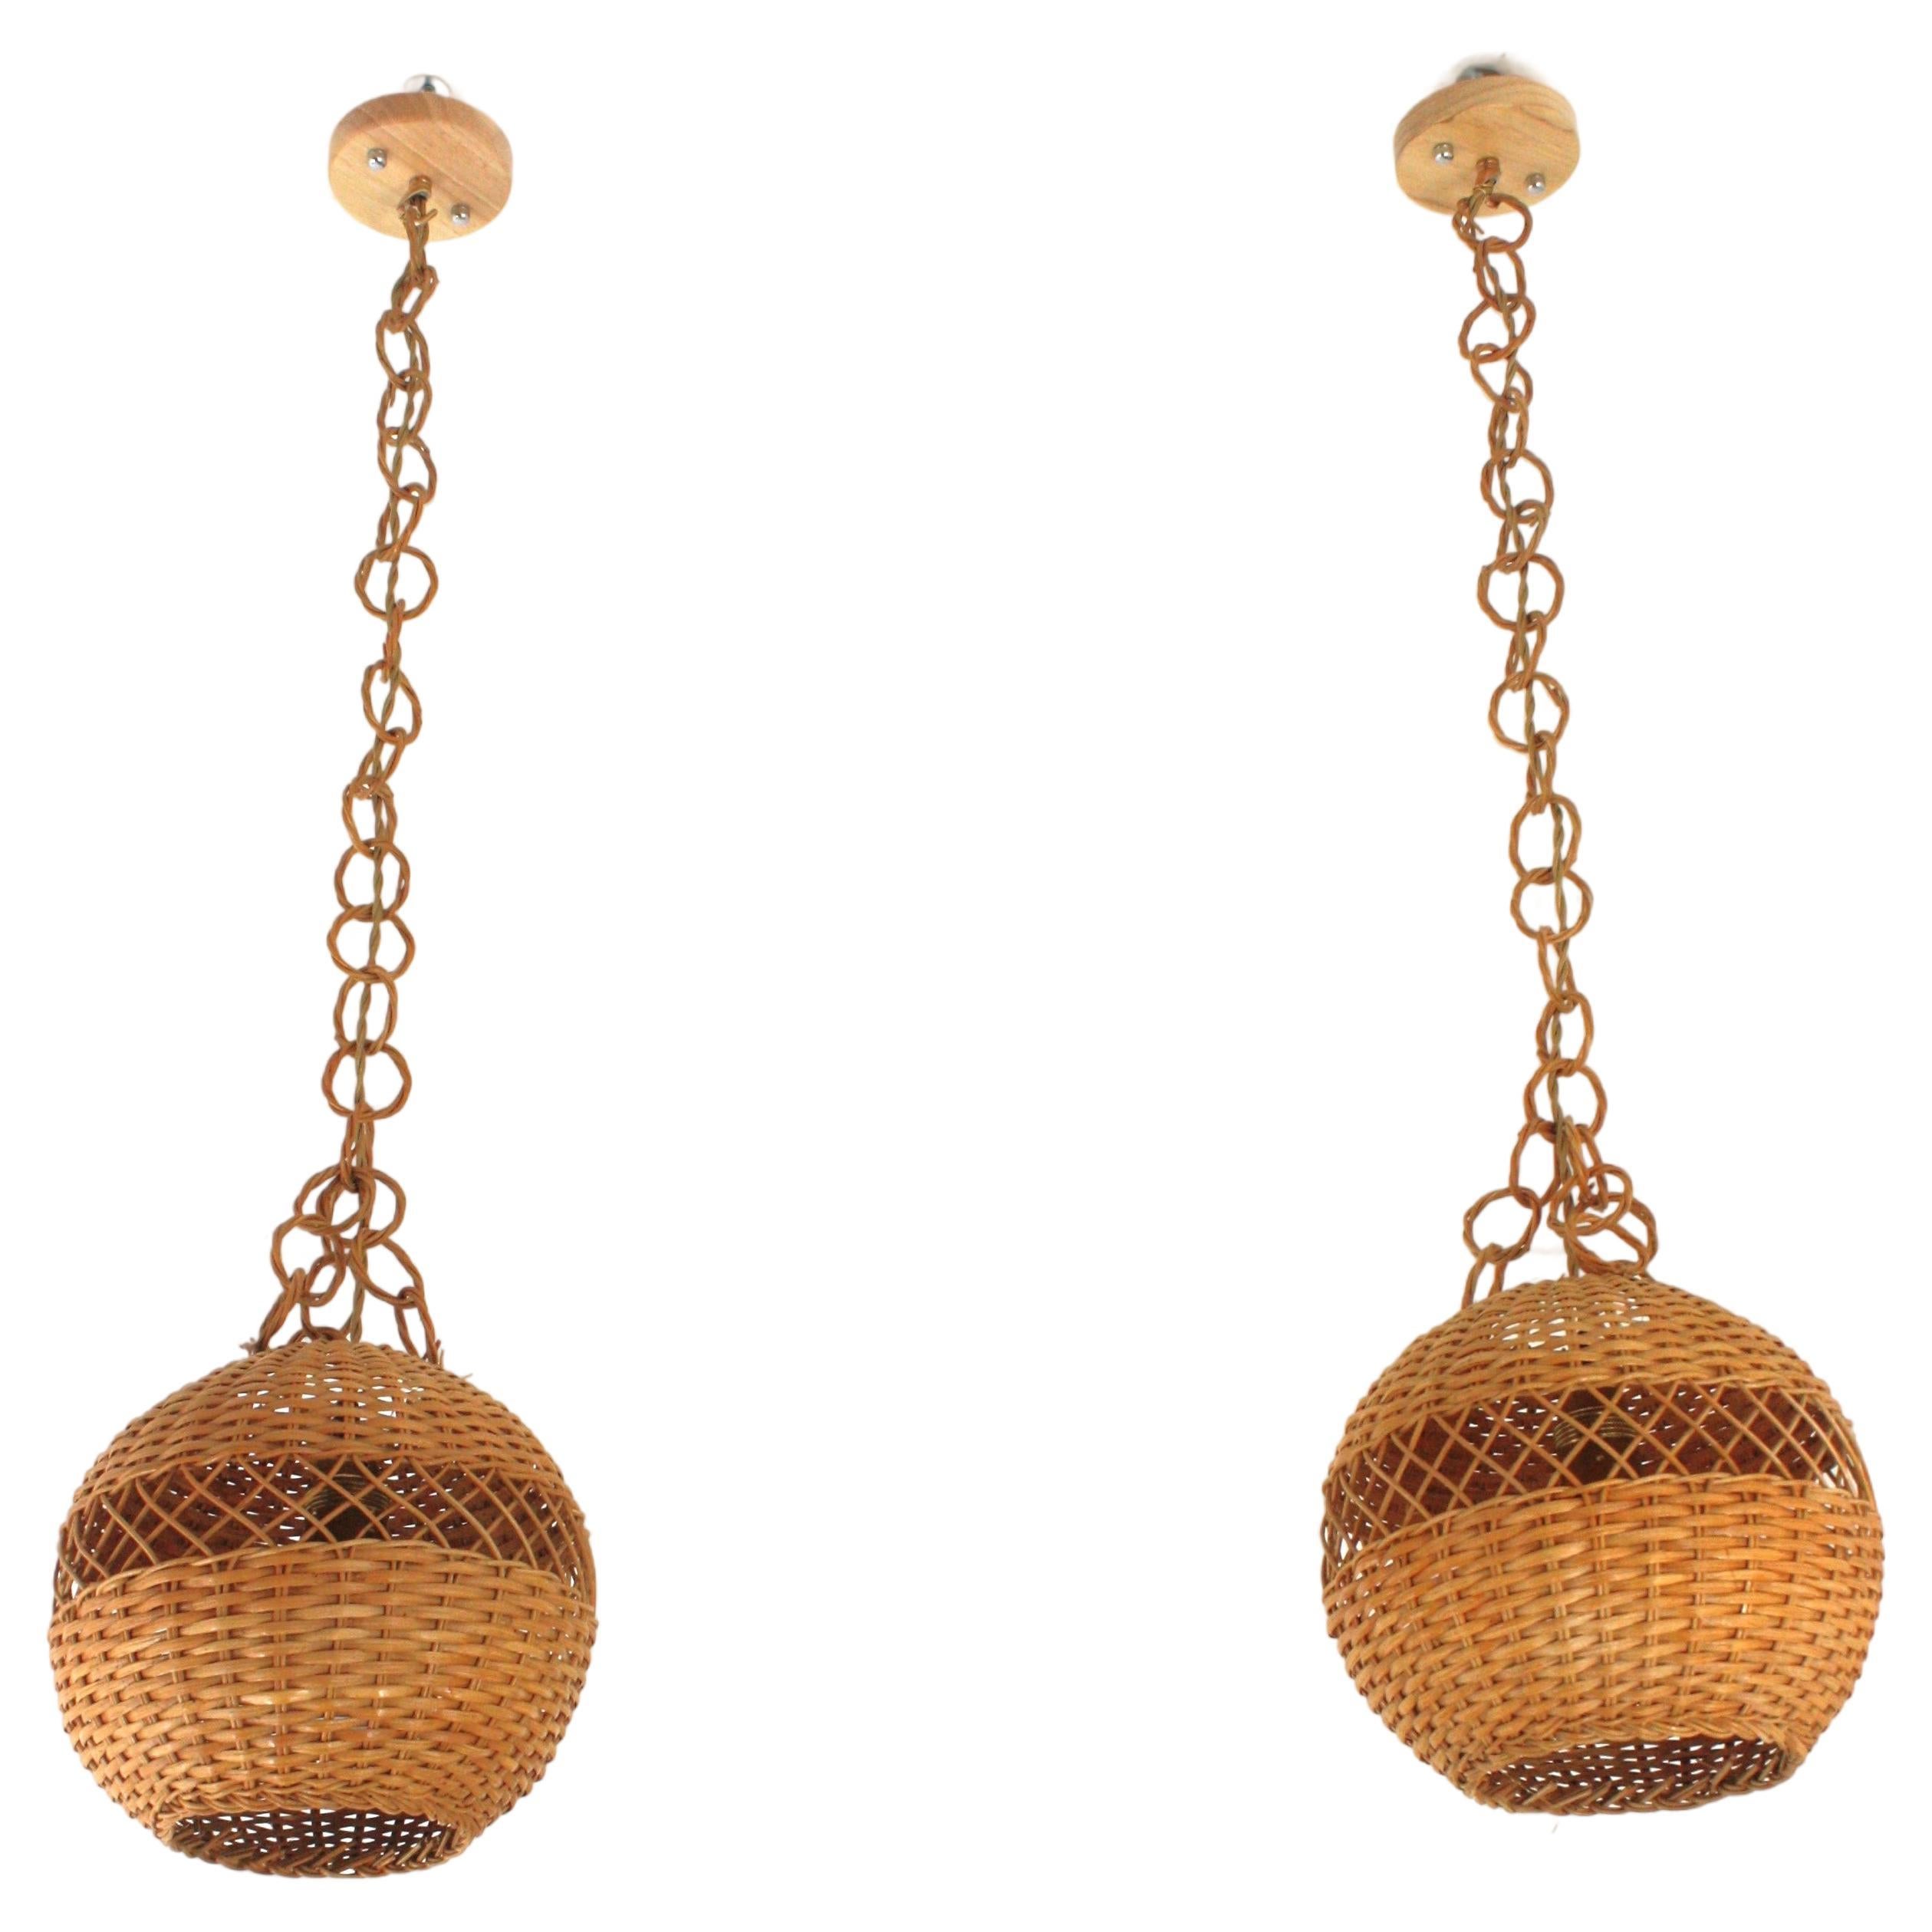 Mid-Century Modern Pair of Handwoven Wicker Globe Pendant Lights or Lanterns For Sale